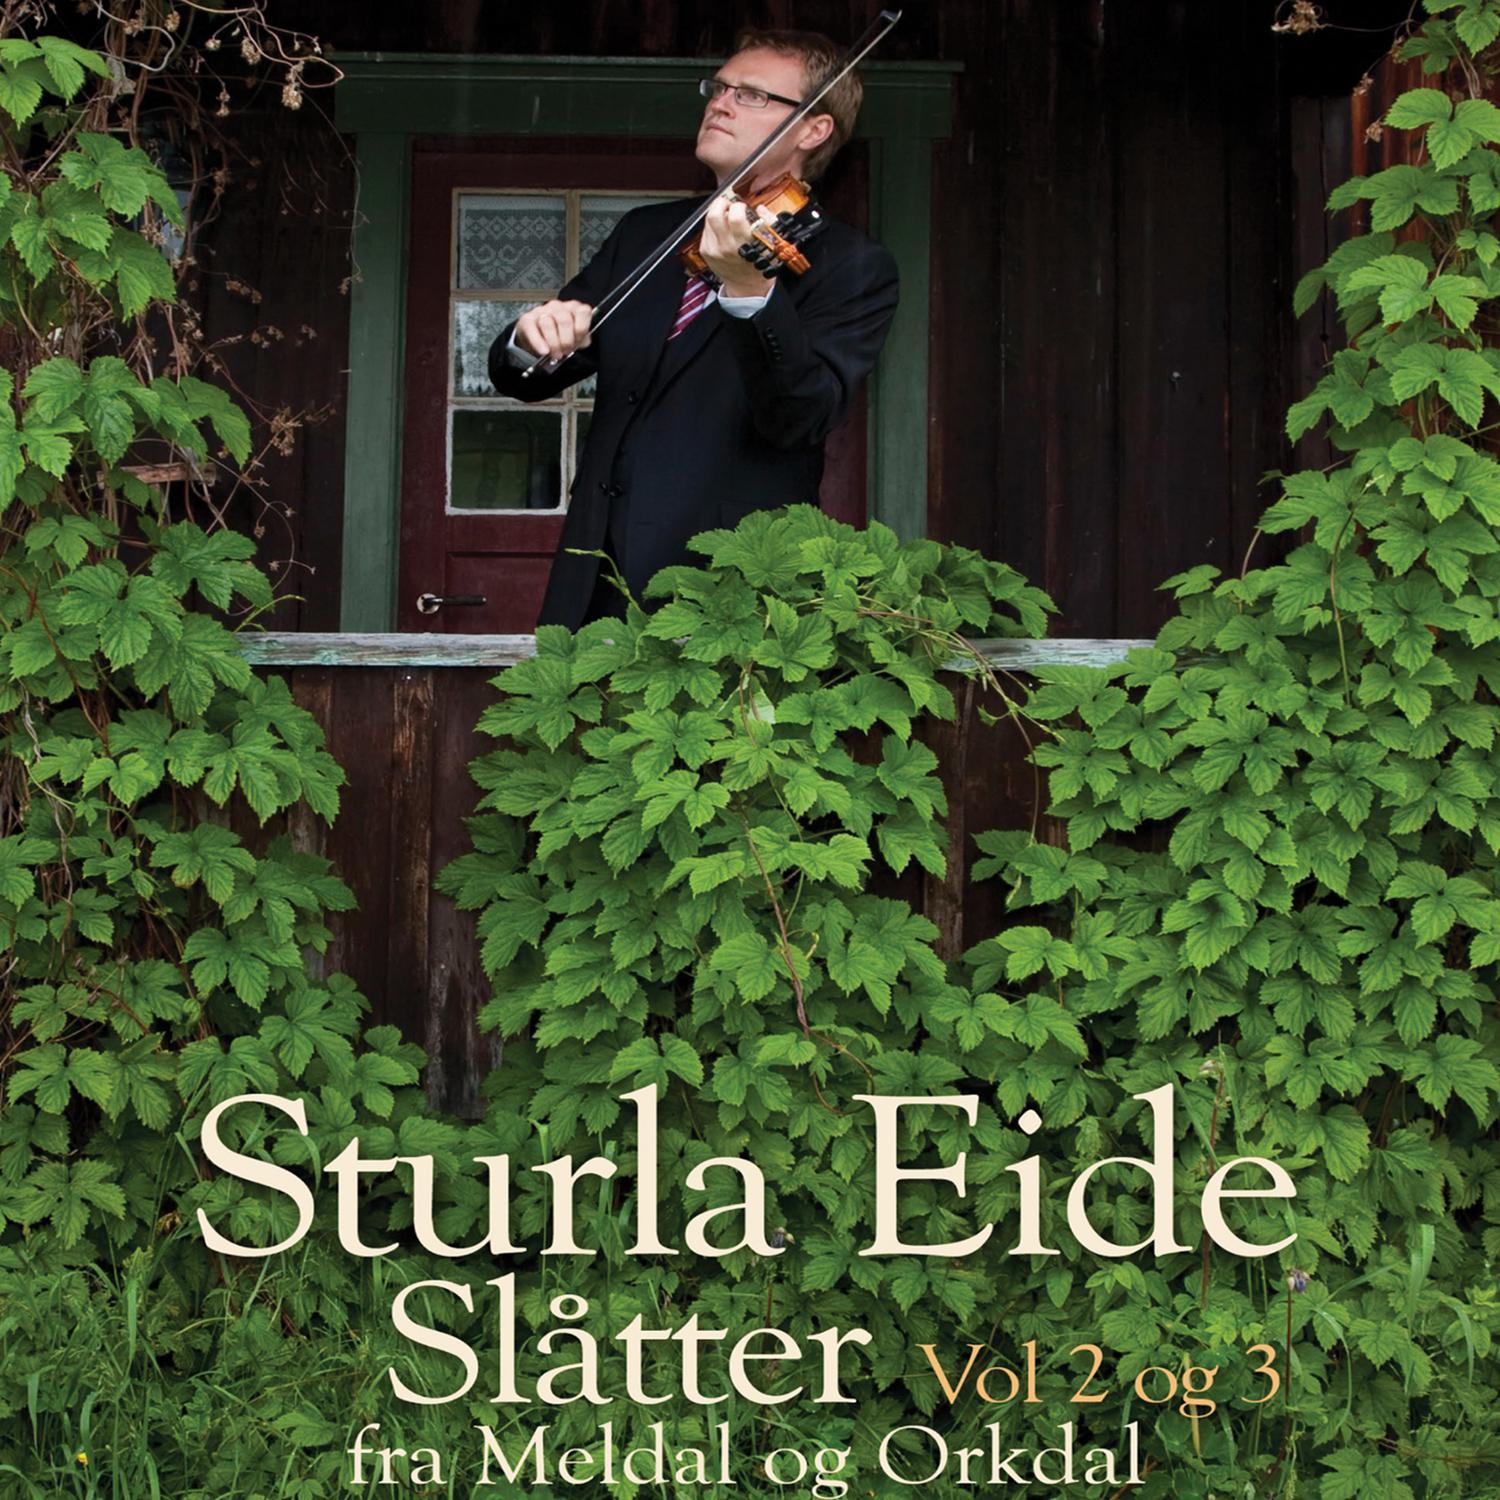 Sturla Eide - Springleik Nr 10 Etter Elling Holstad